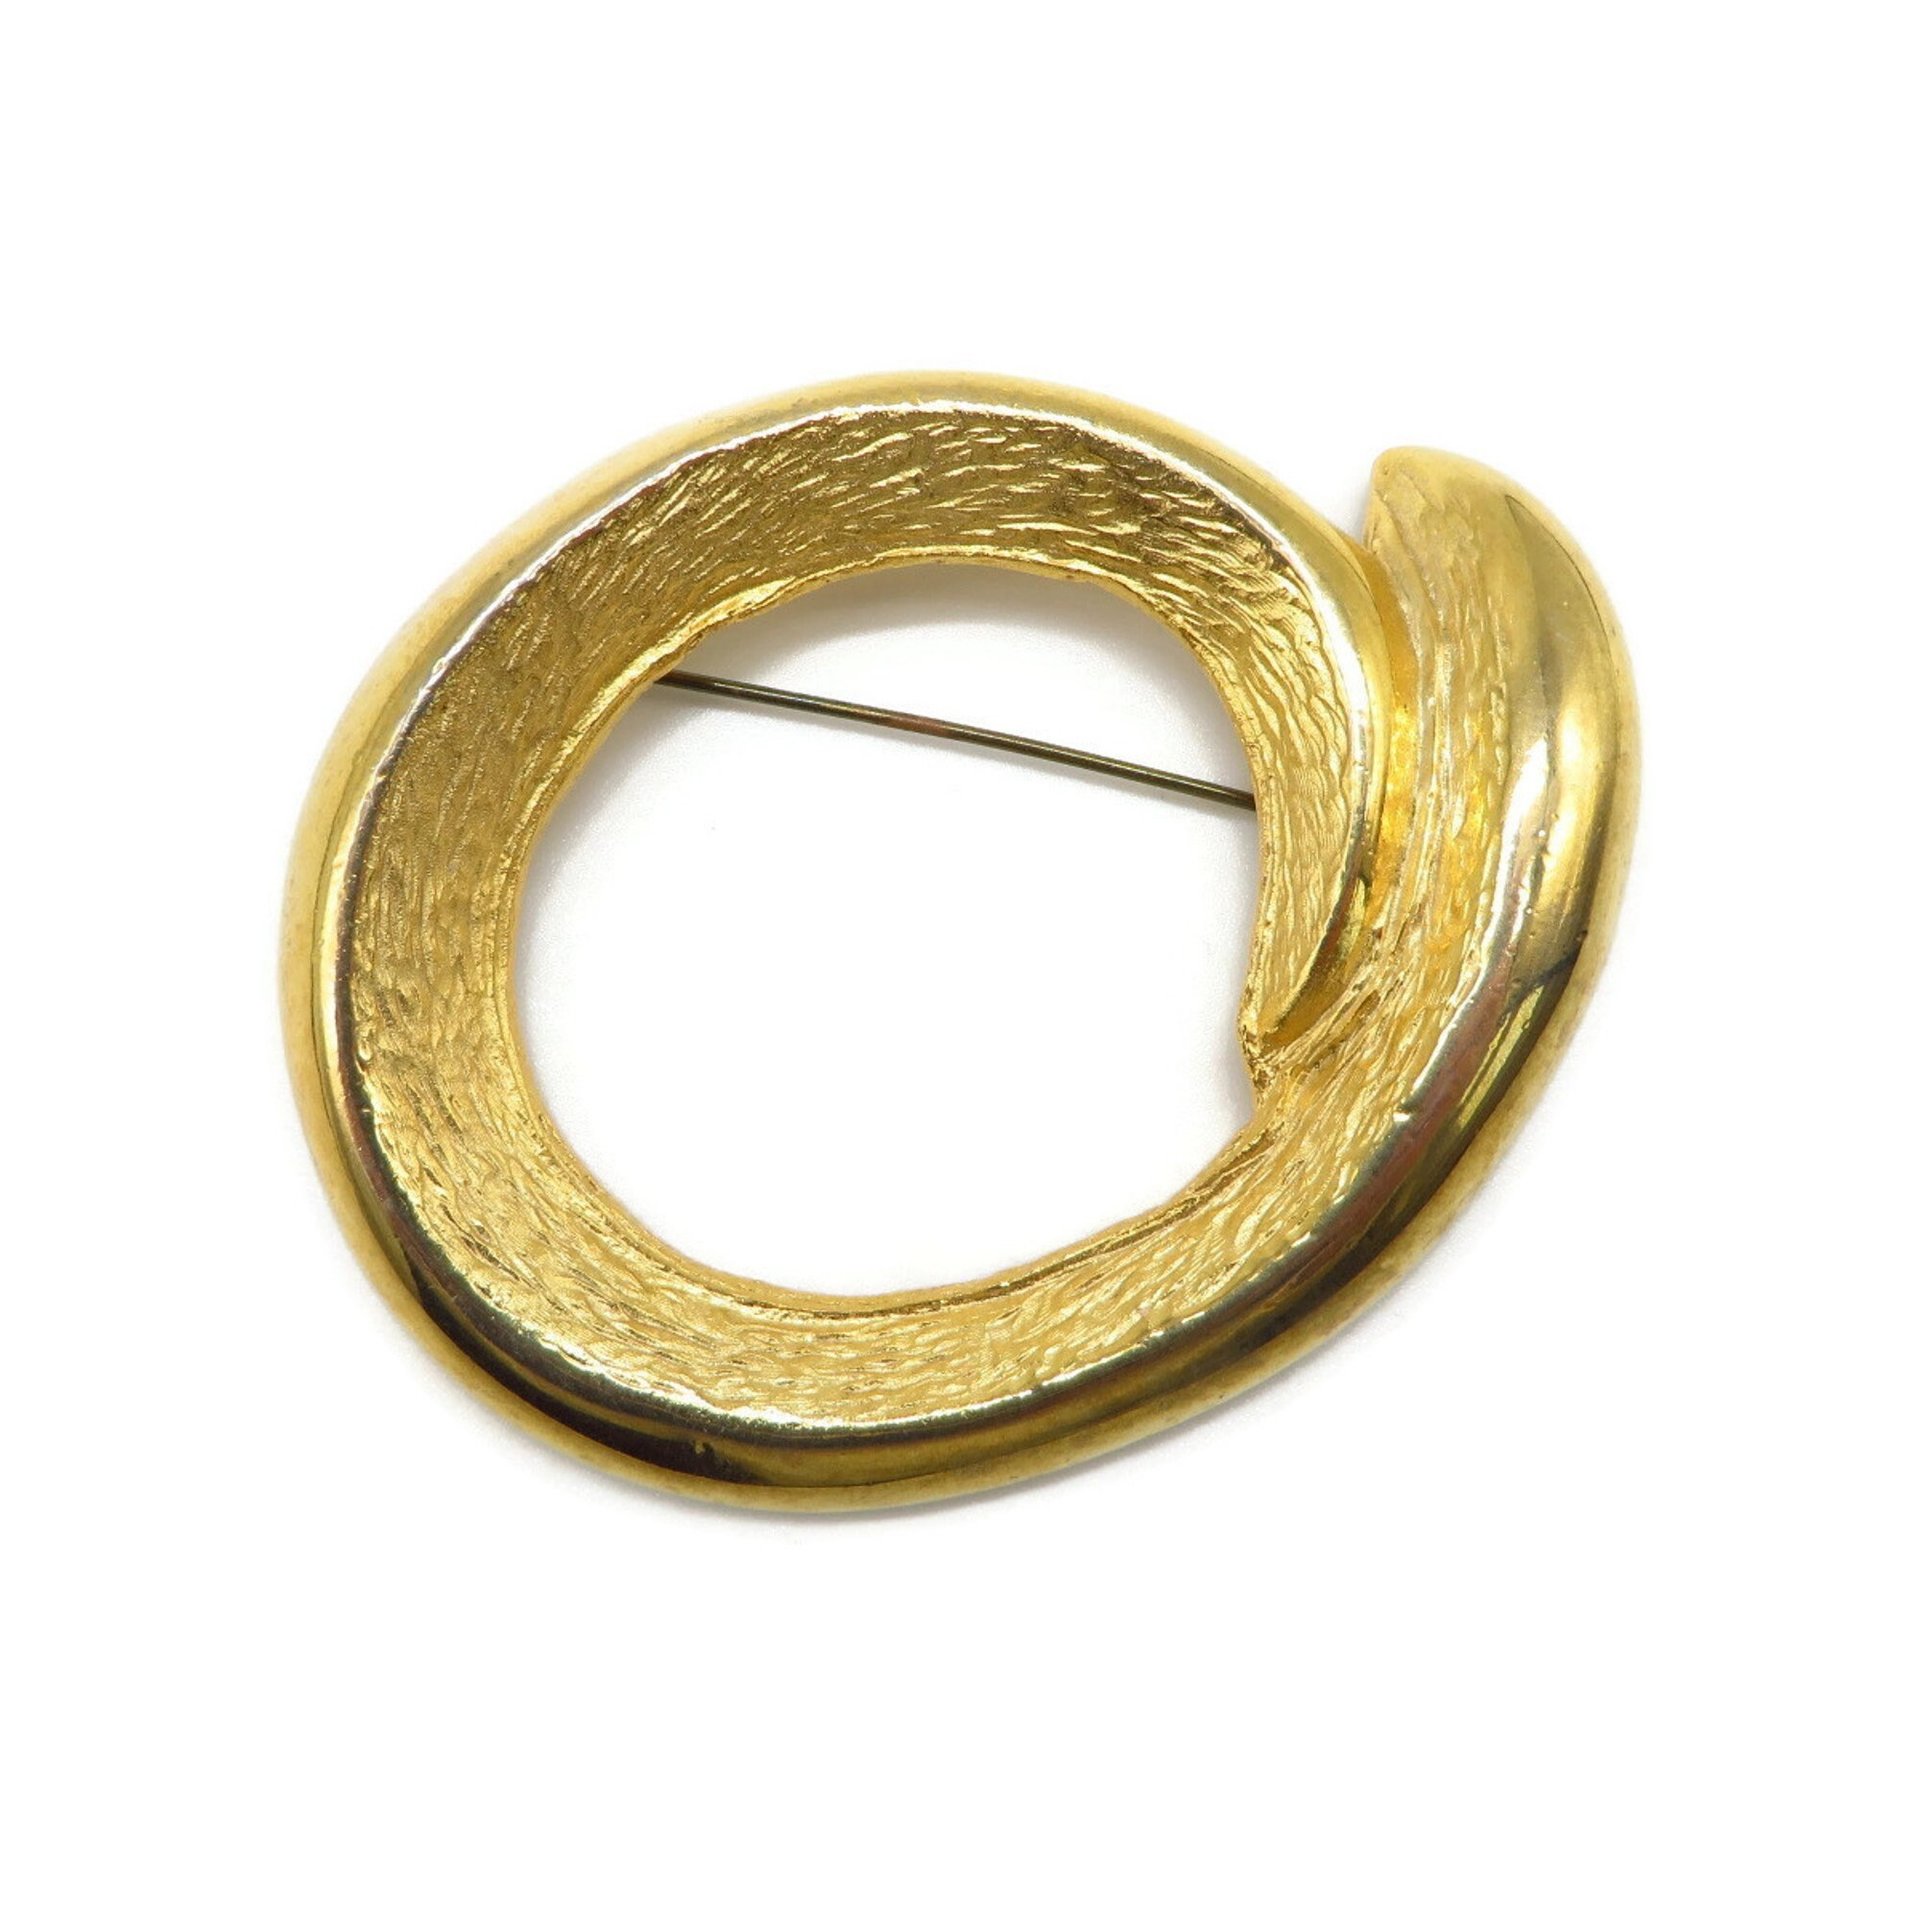 ELLE Gold Tone Textured Circle Pin